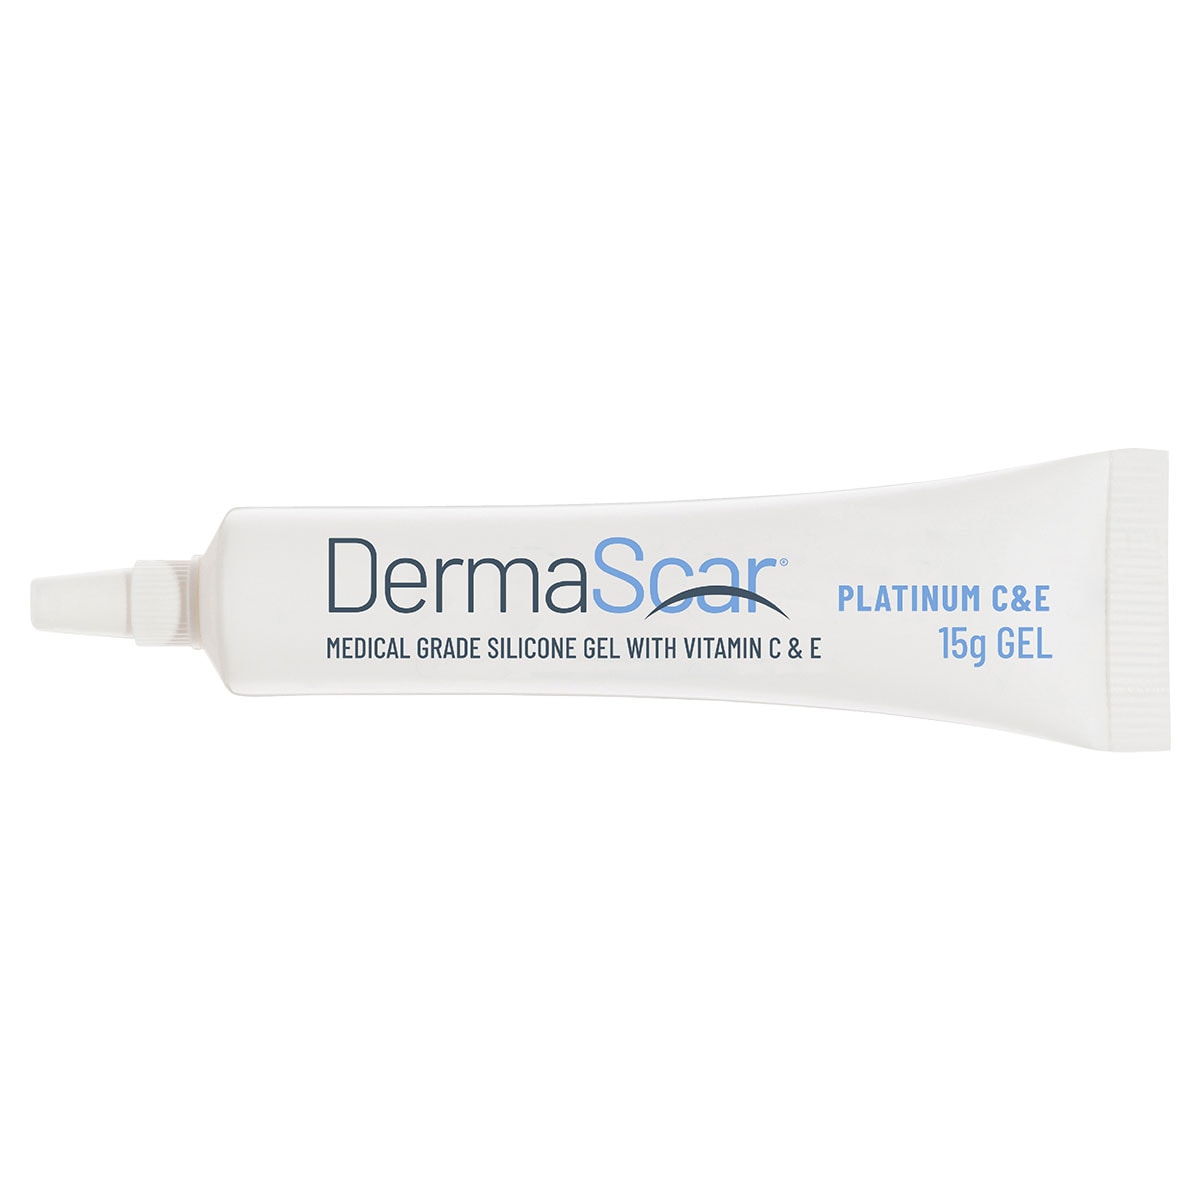 DermaScar Silicone Scar Reduction Gel Platinum C&E 15g